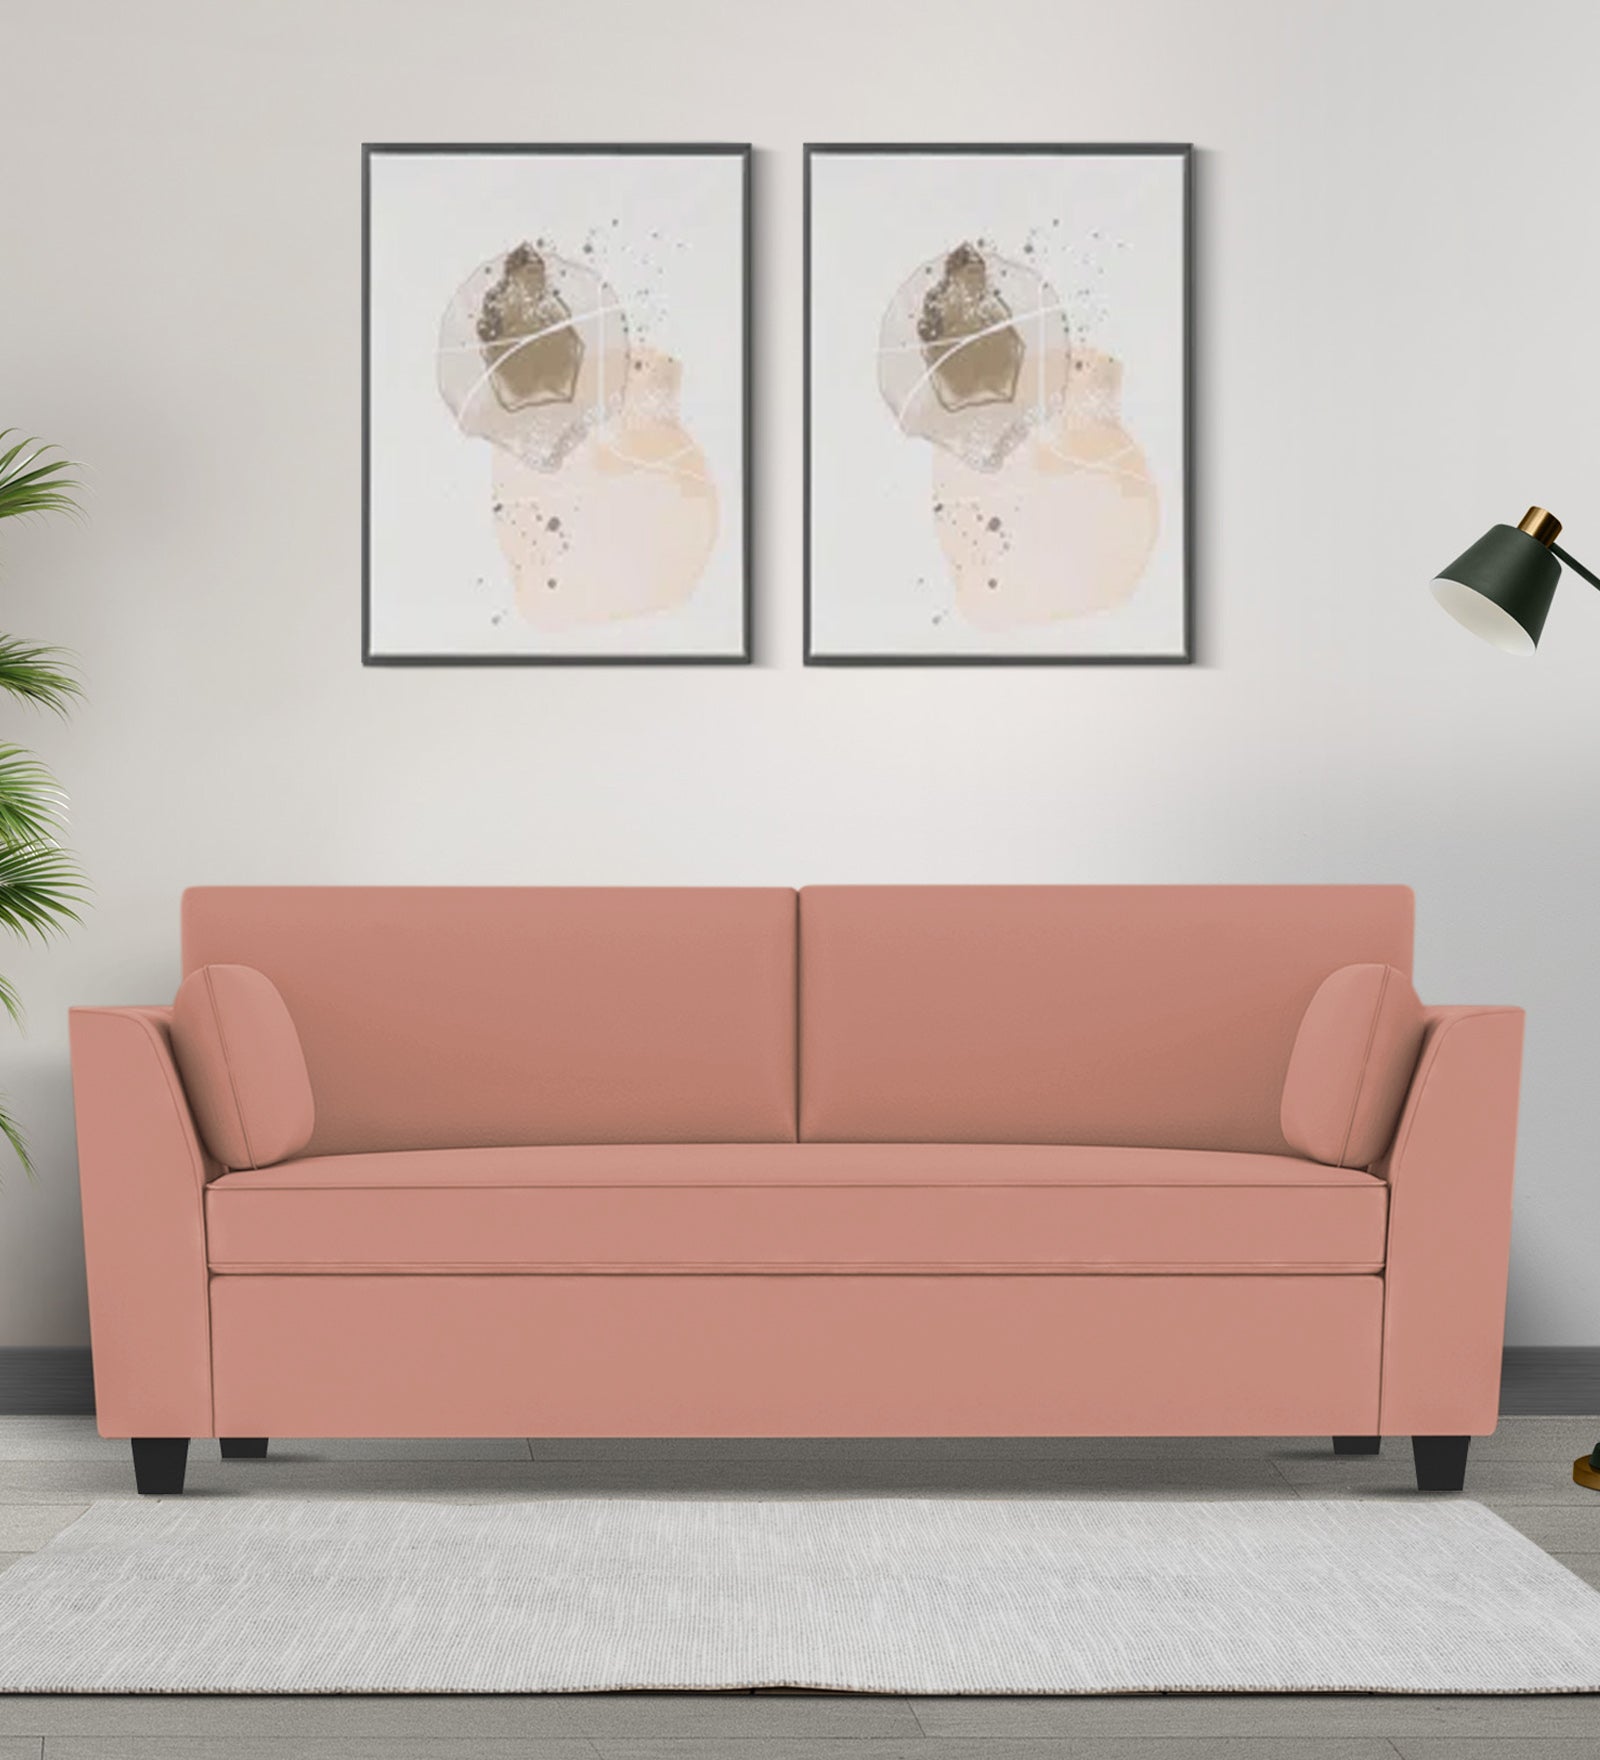 Bristo Velvet 3 Seater Sofa in Blush Pink Colour With Storage